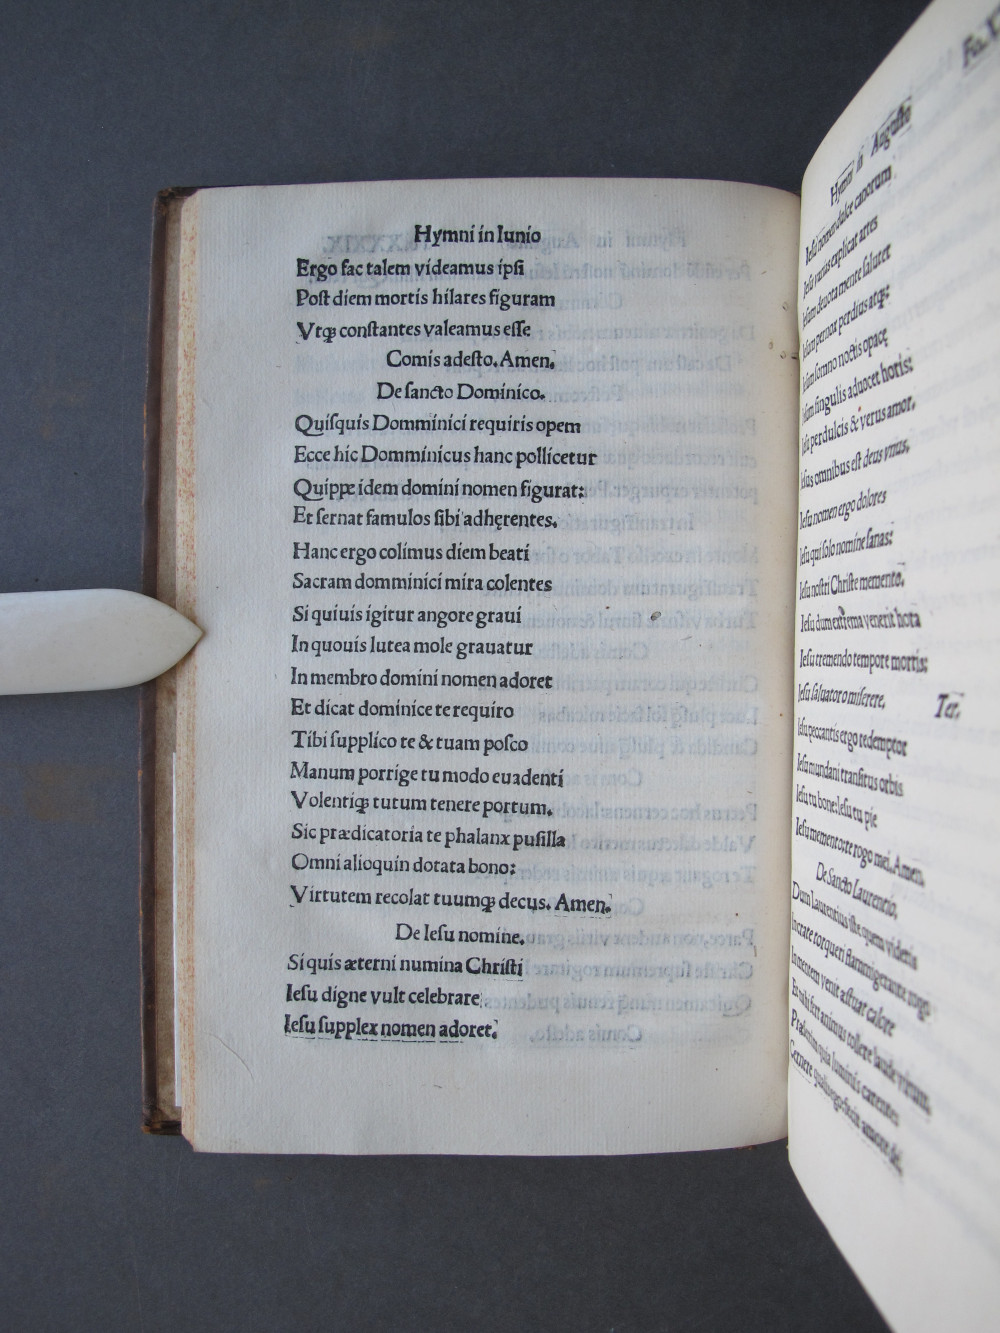 Folio 39 verso